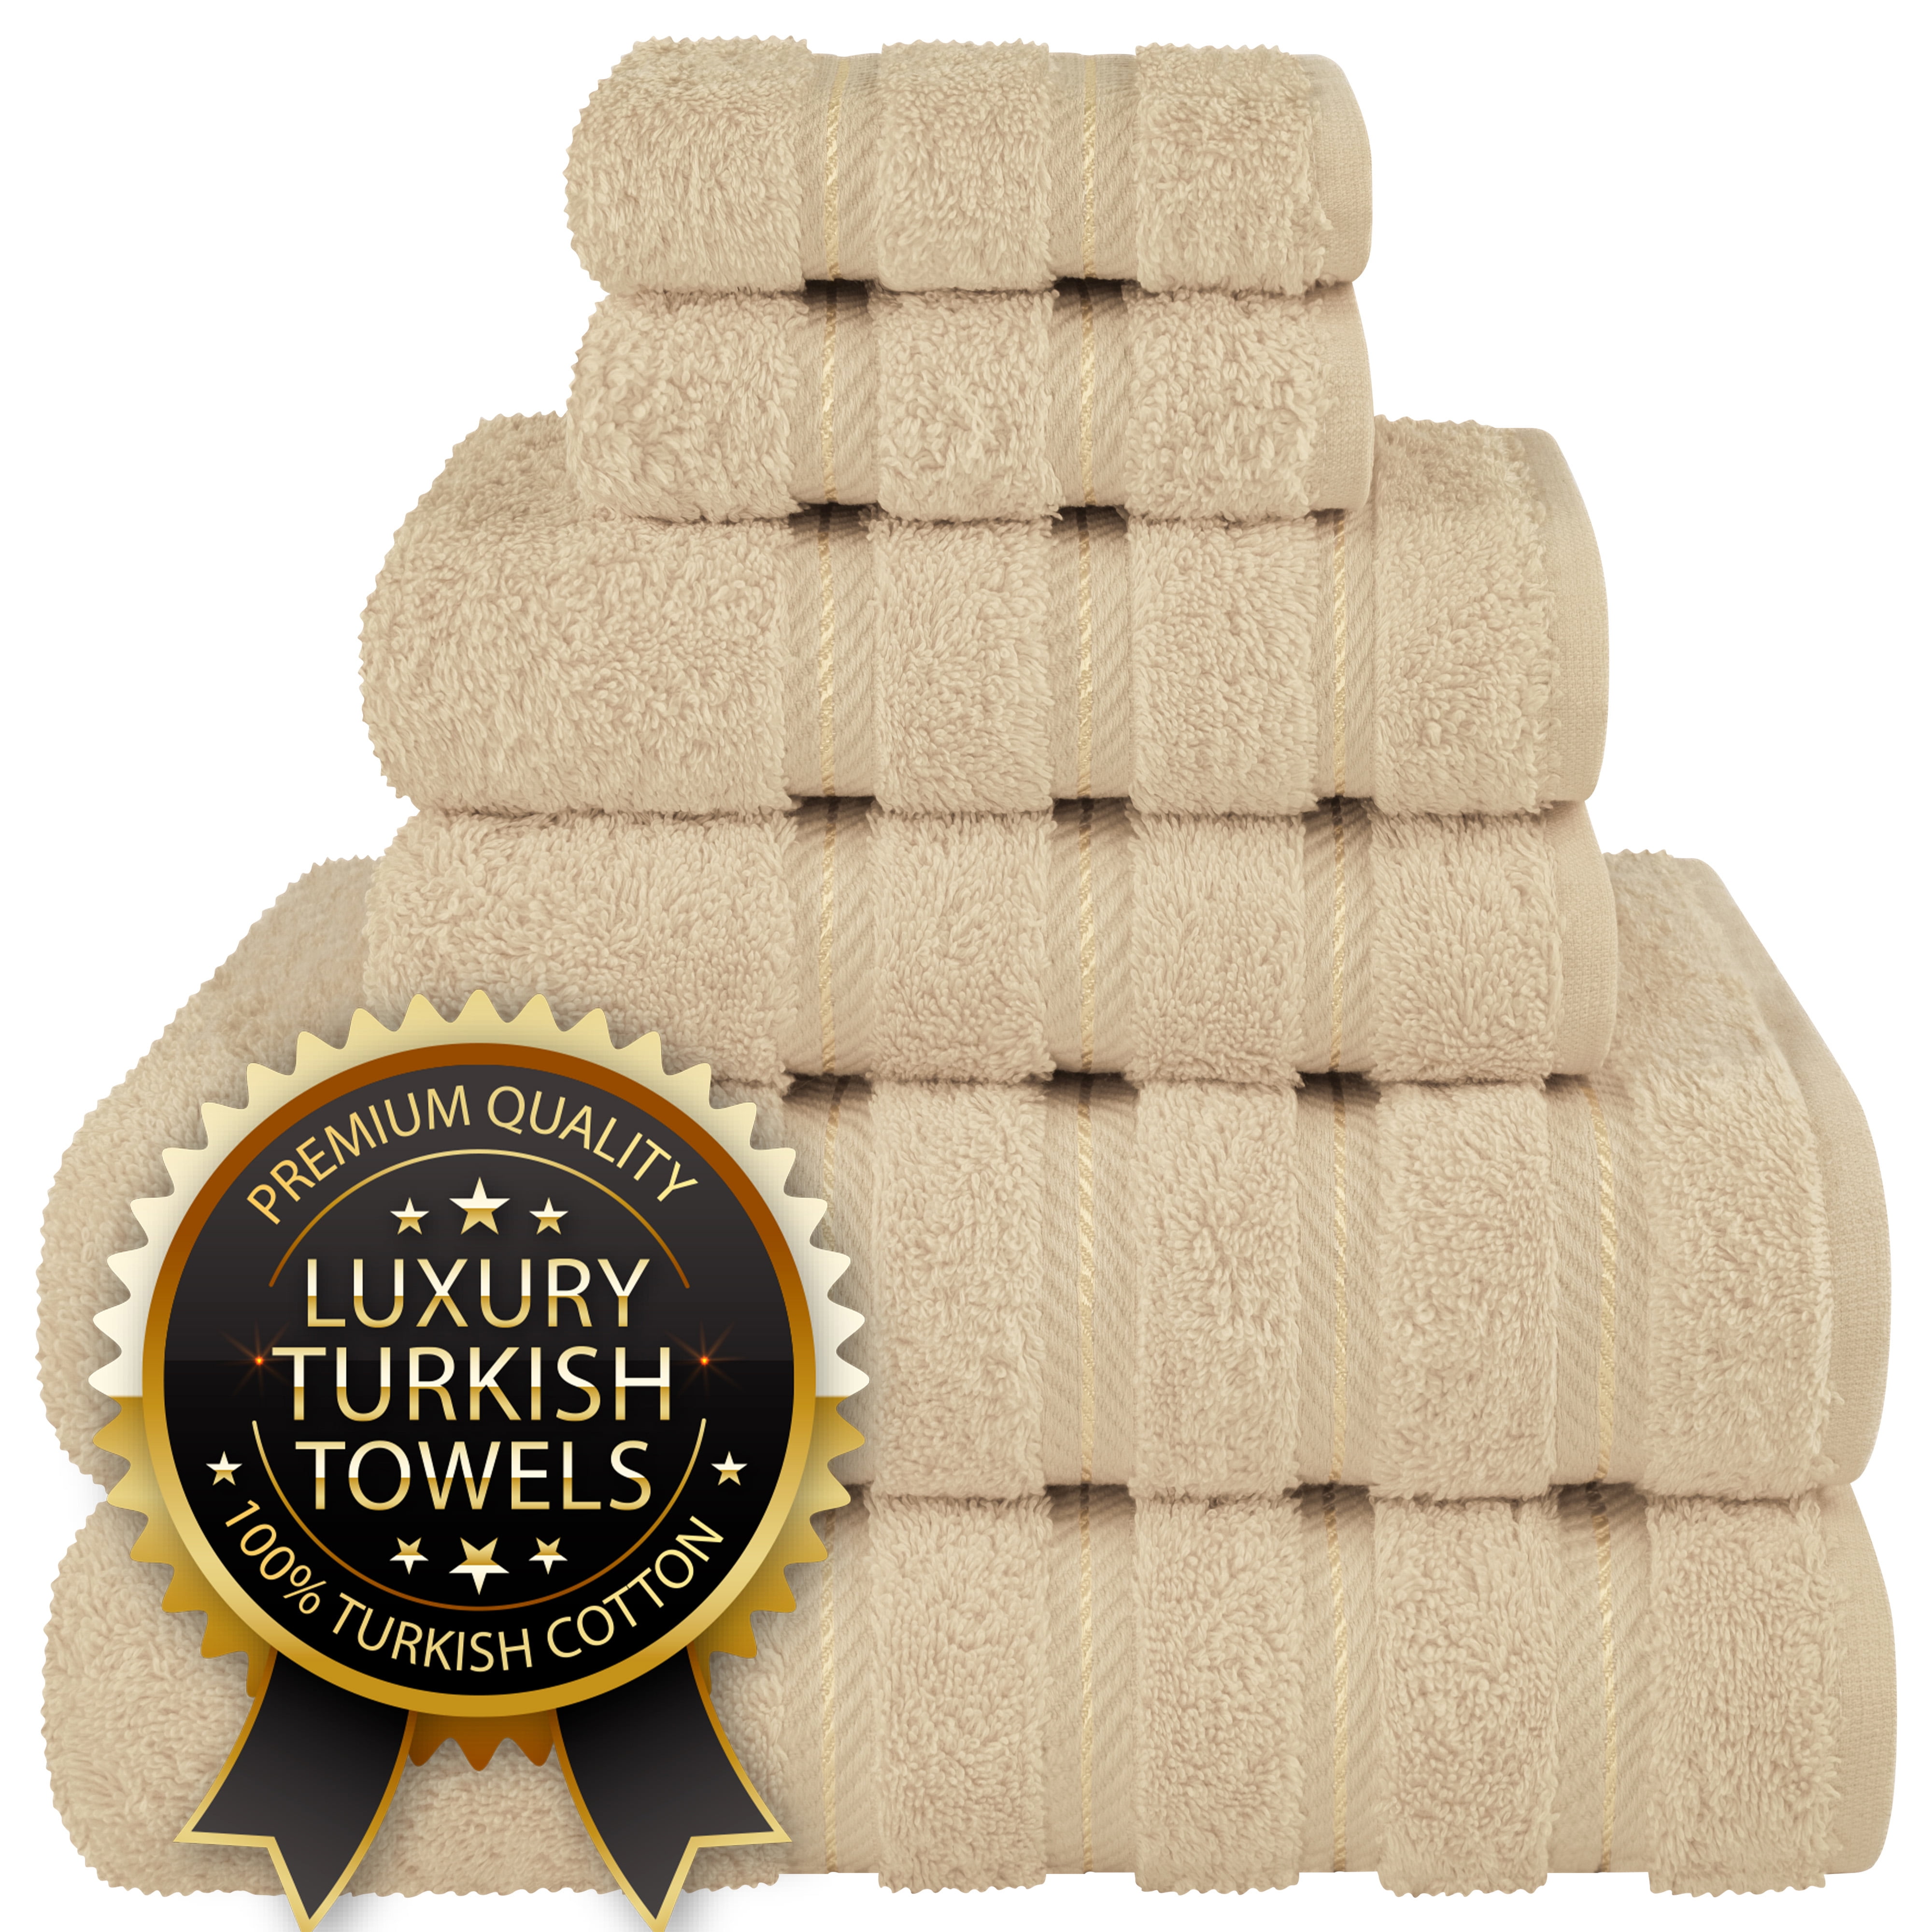 American Soft Linen Luxury 3 Piece Towel Sets, 1 Bath Towel 1 Hand Towel 1 Washcloth, 100% Turkish Cotton Towels for Bathroom, Beige Towel Set